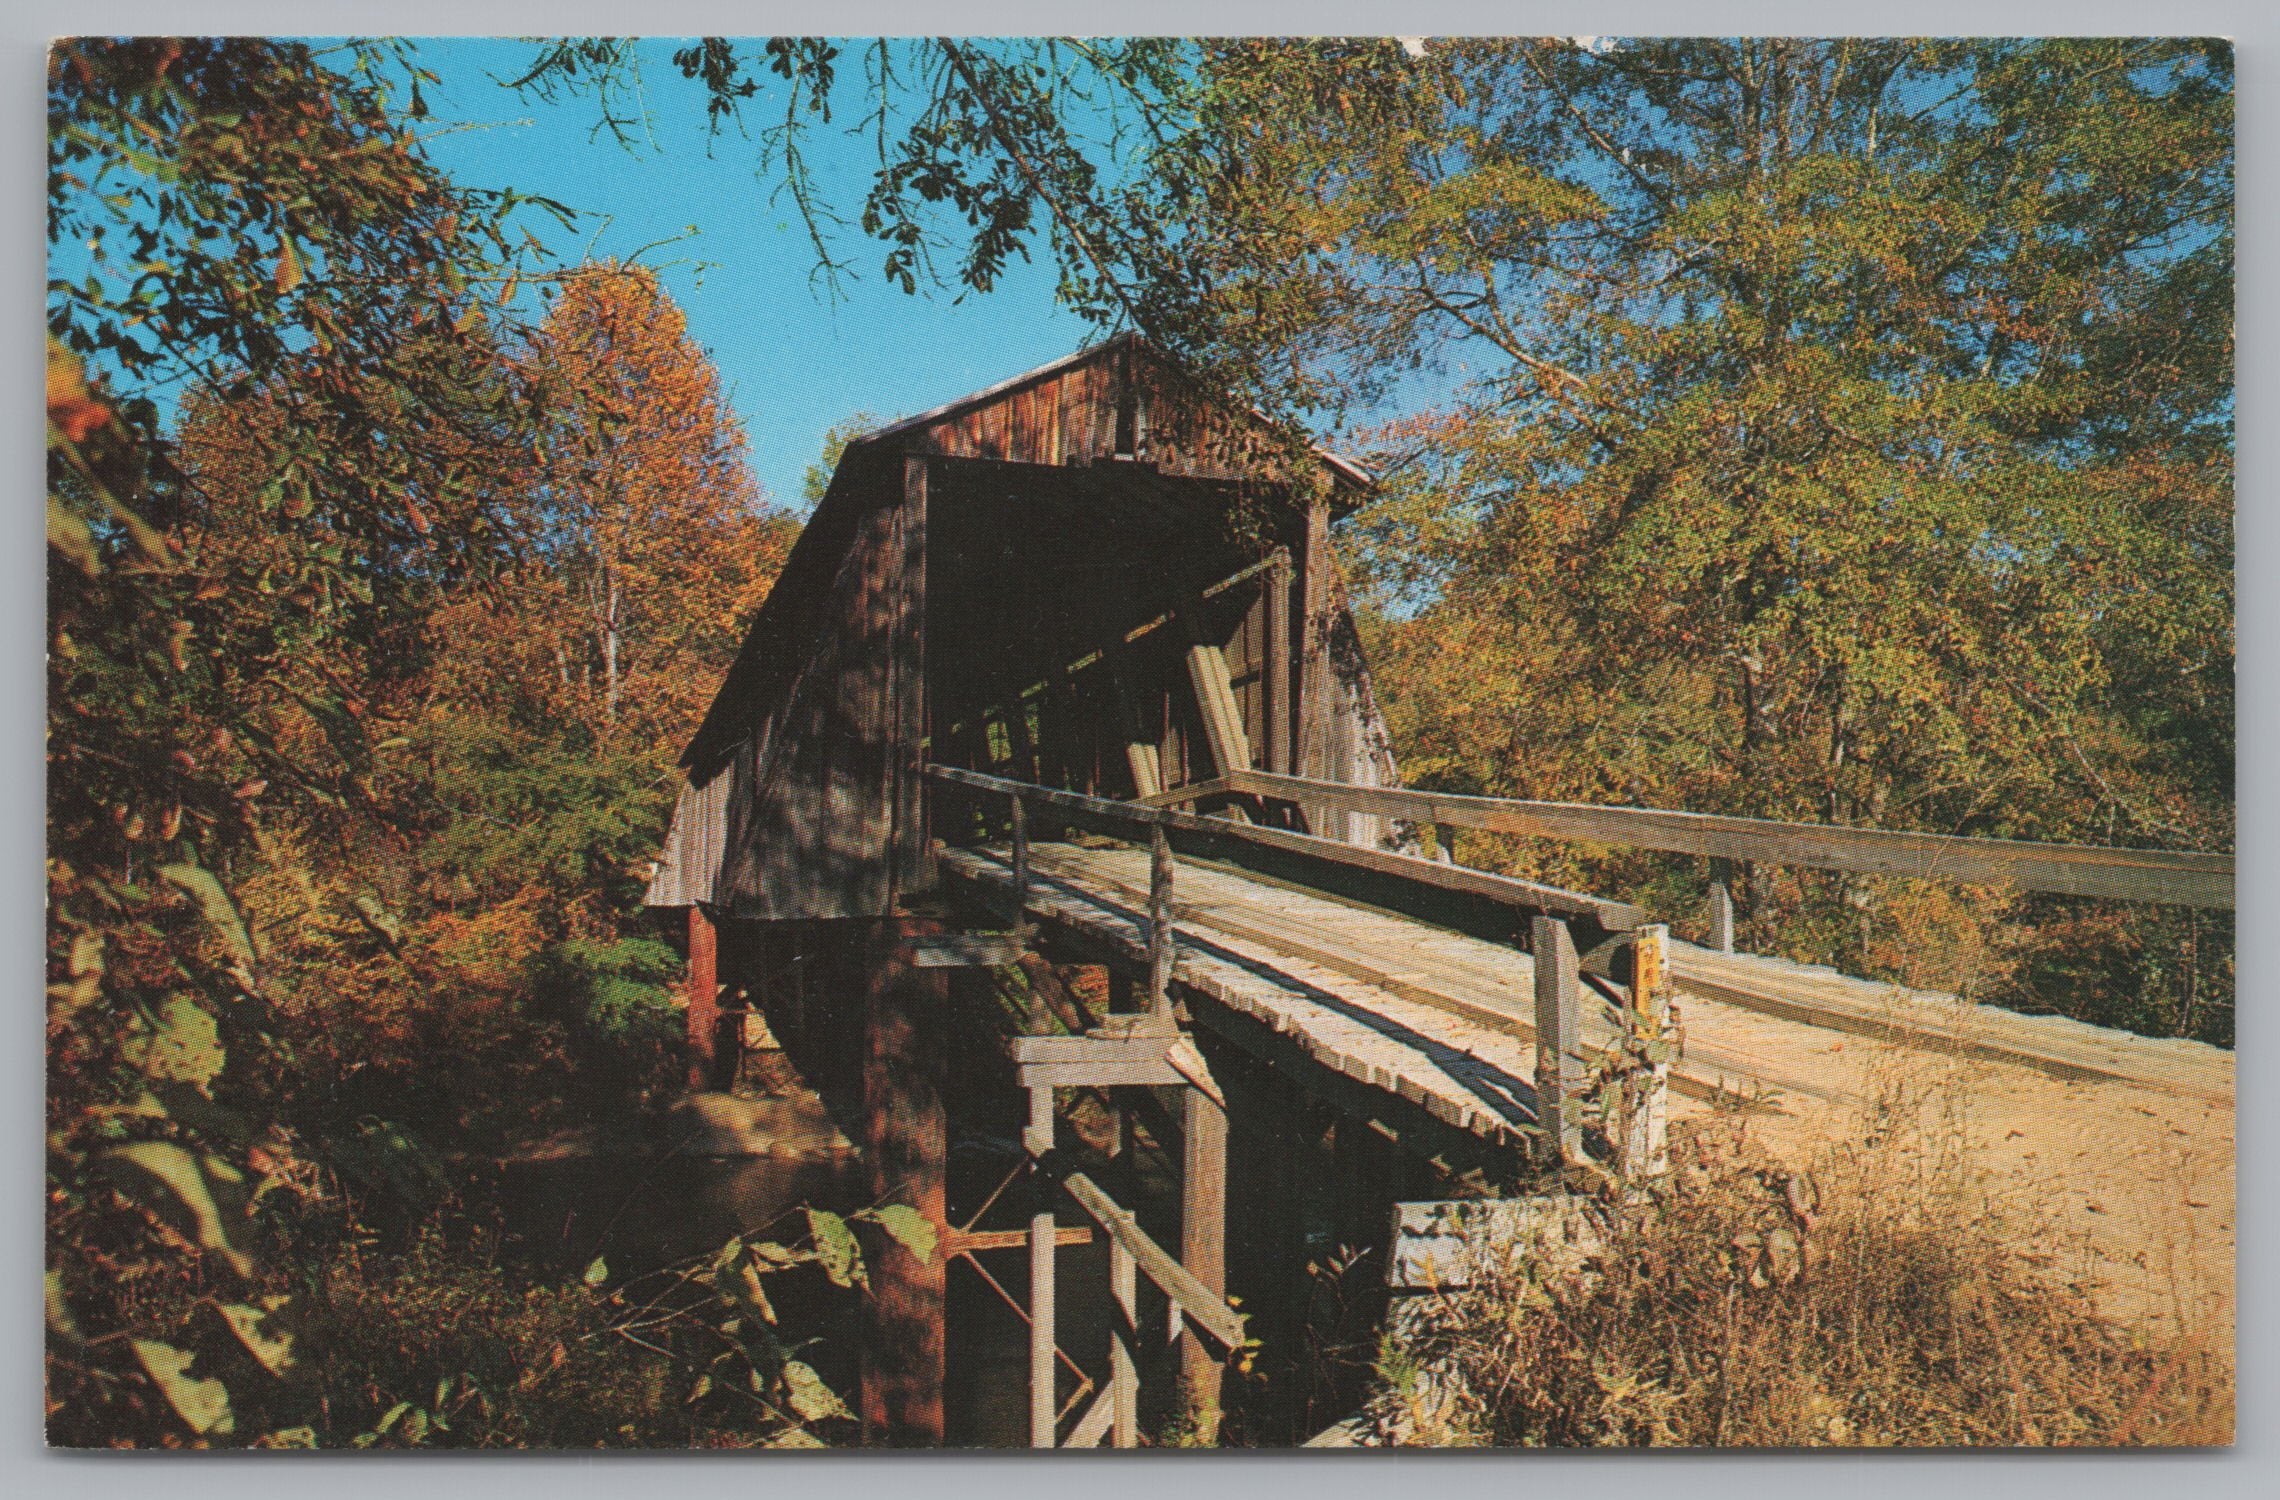 Historic Old Covered Bridge, The Chapmans Bridge, Vintage Post Card.